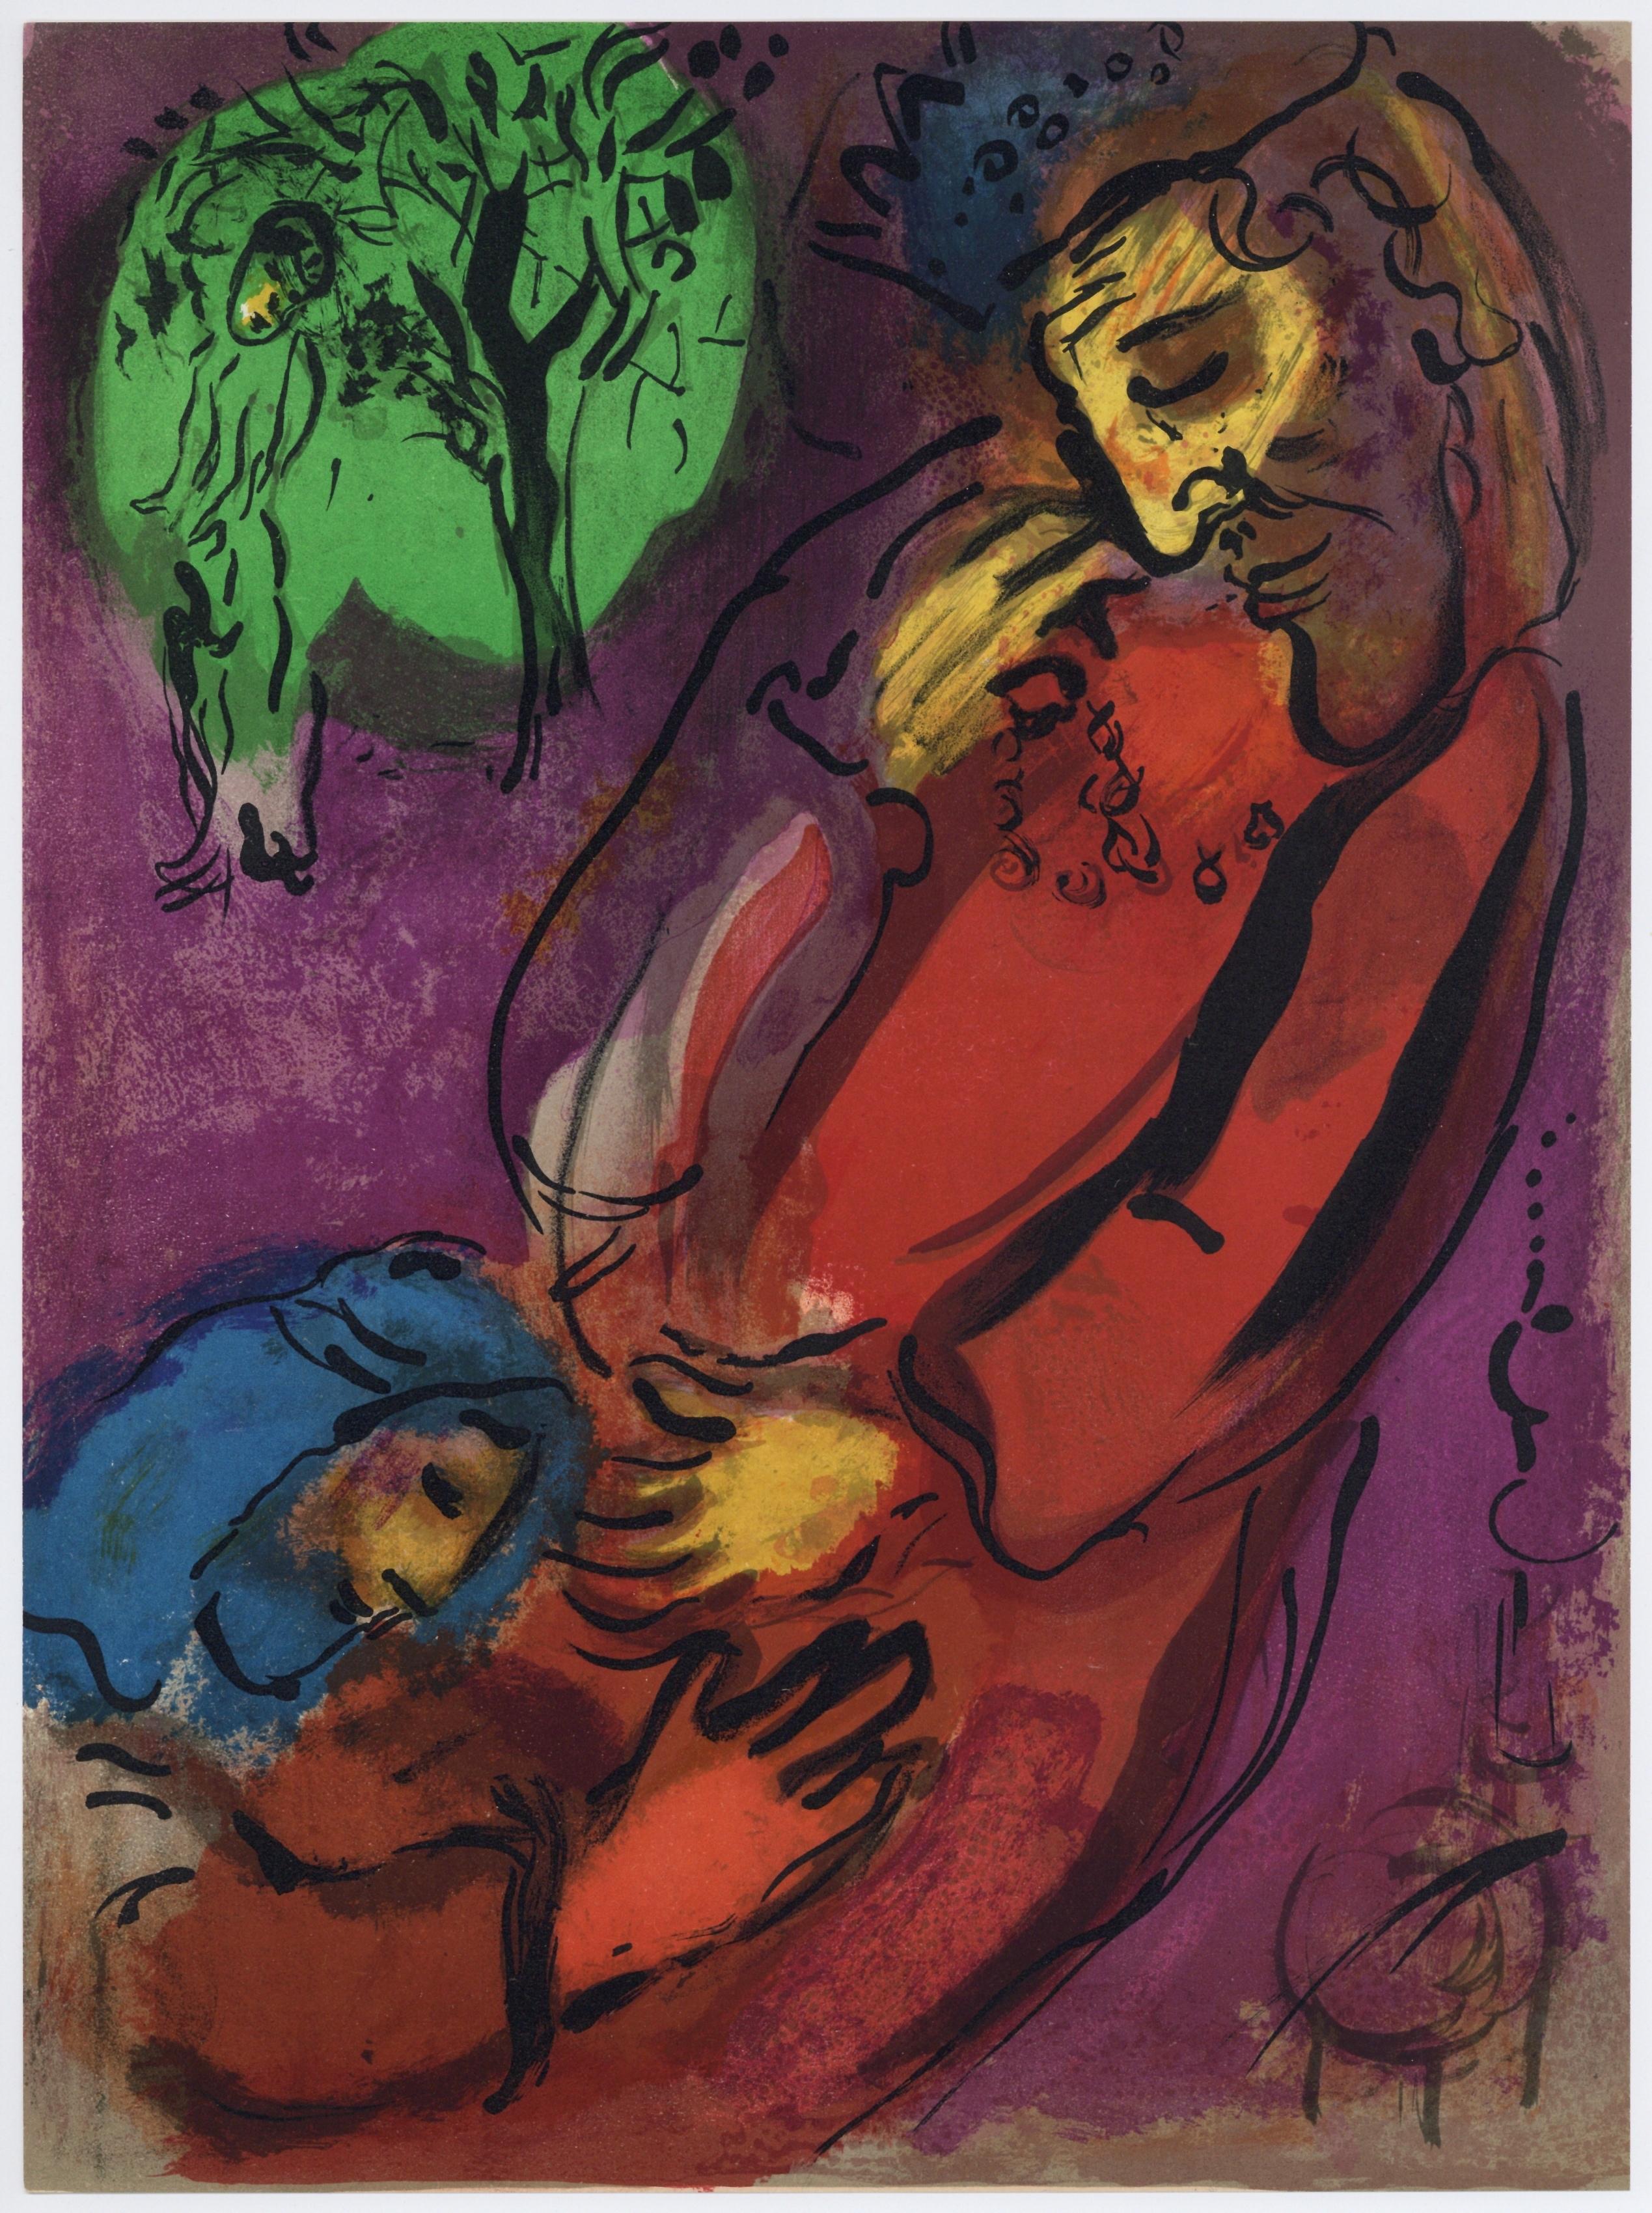 Marc Chagall Portrait Print - "David and Absalom" original lithograph